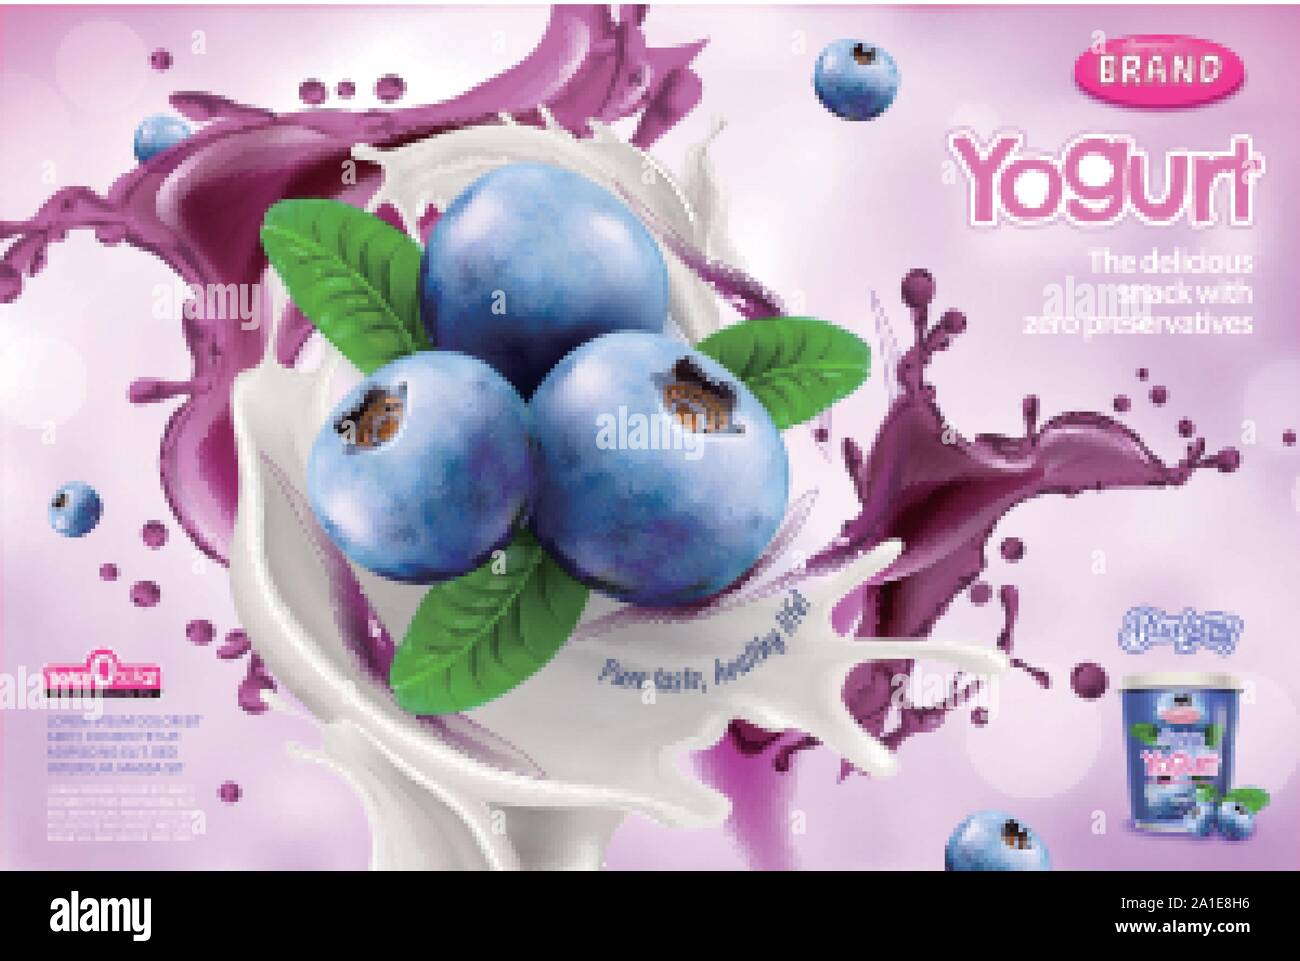 Blueberry yogurt ads with splashing sauce on purple background in 3d illustration Stock Vector